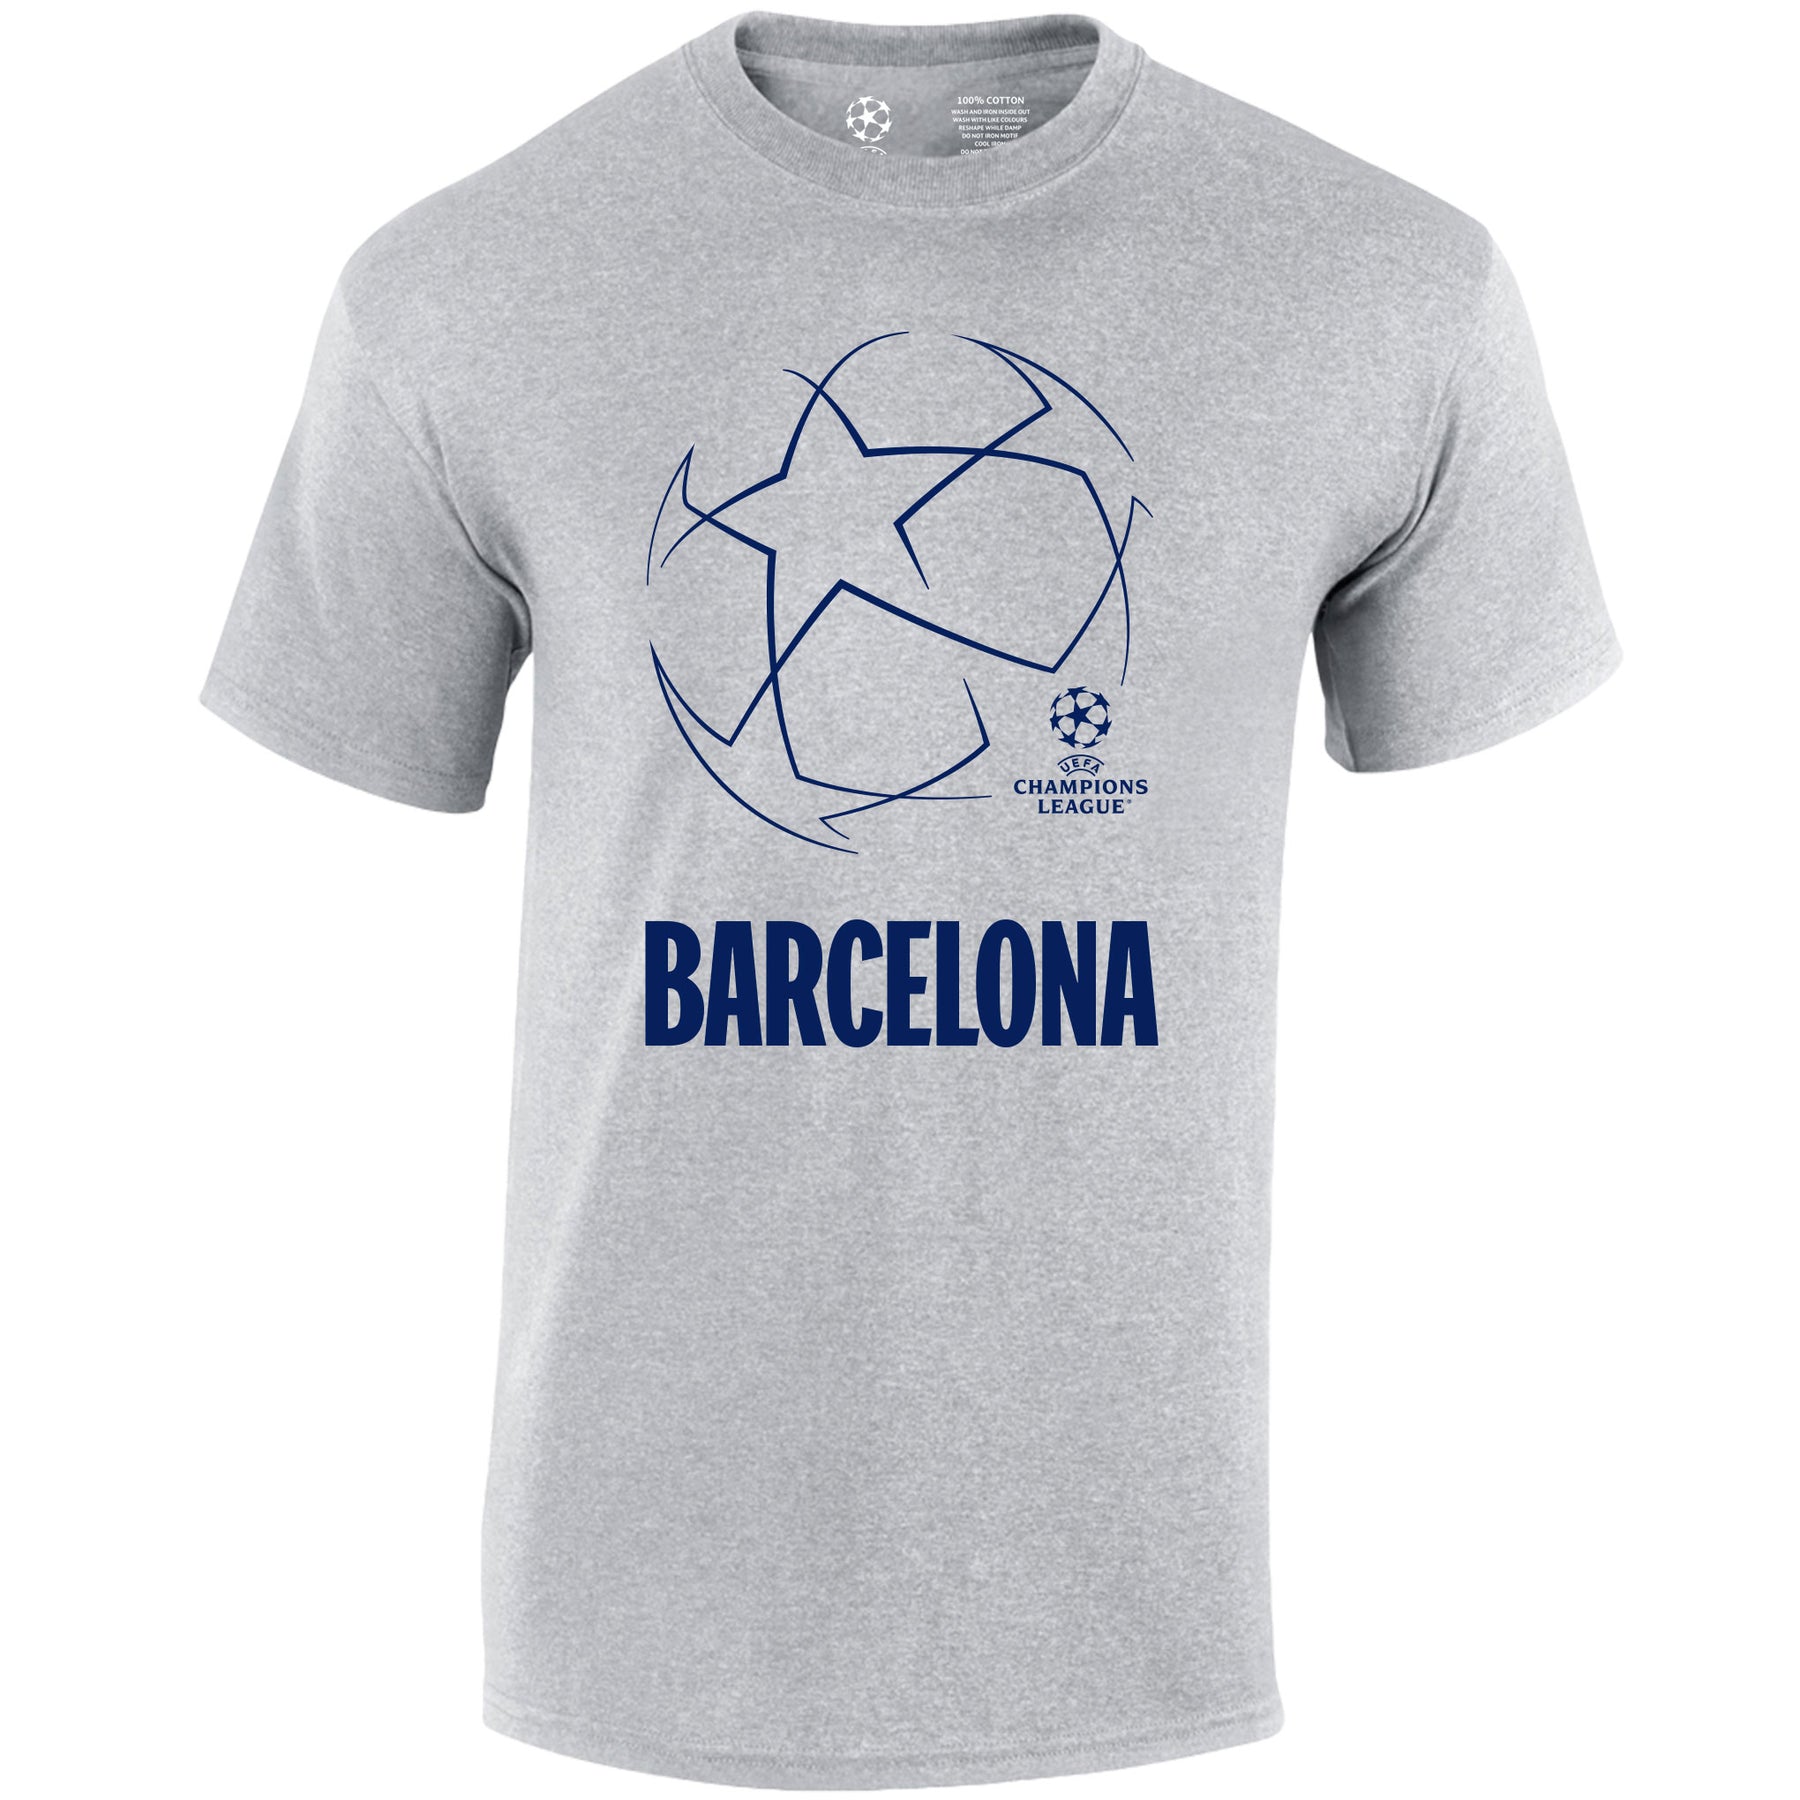 Champions League Starball Barcelona City T-Shirt Grey